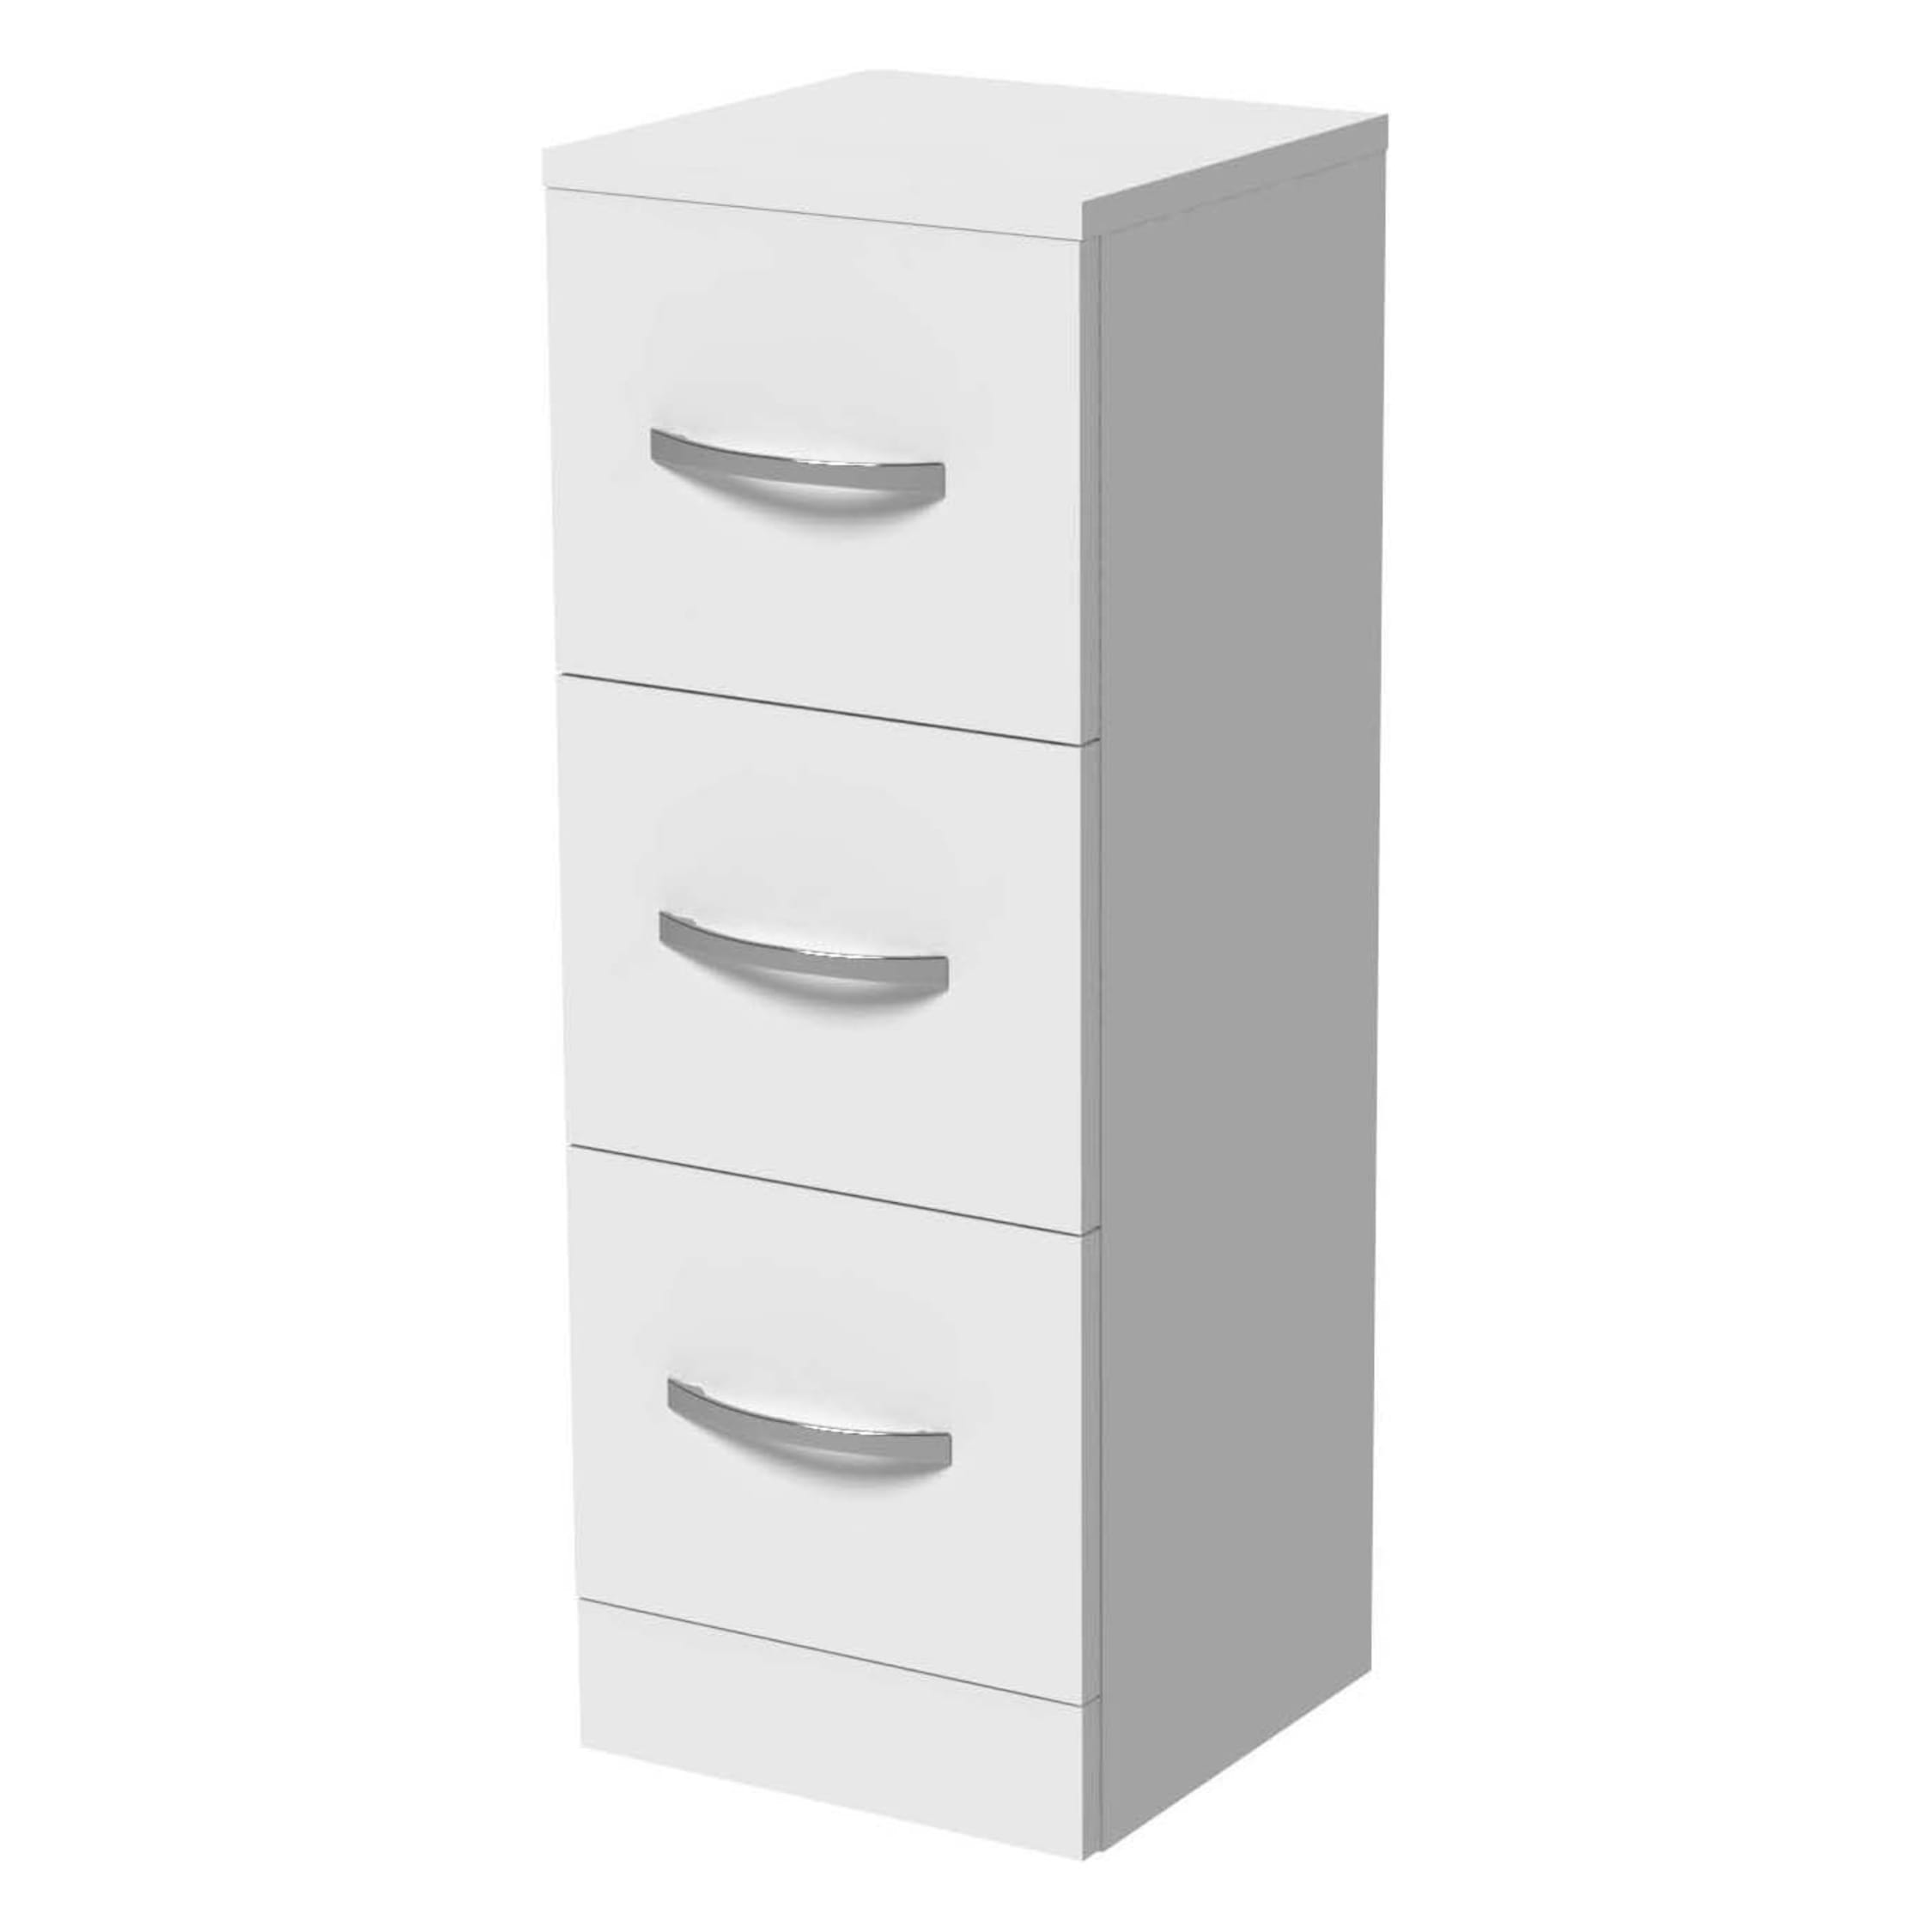 300mm 4 Draw Gloss White Bathroom Furniture Cabinet Storage Unit 